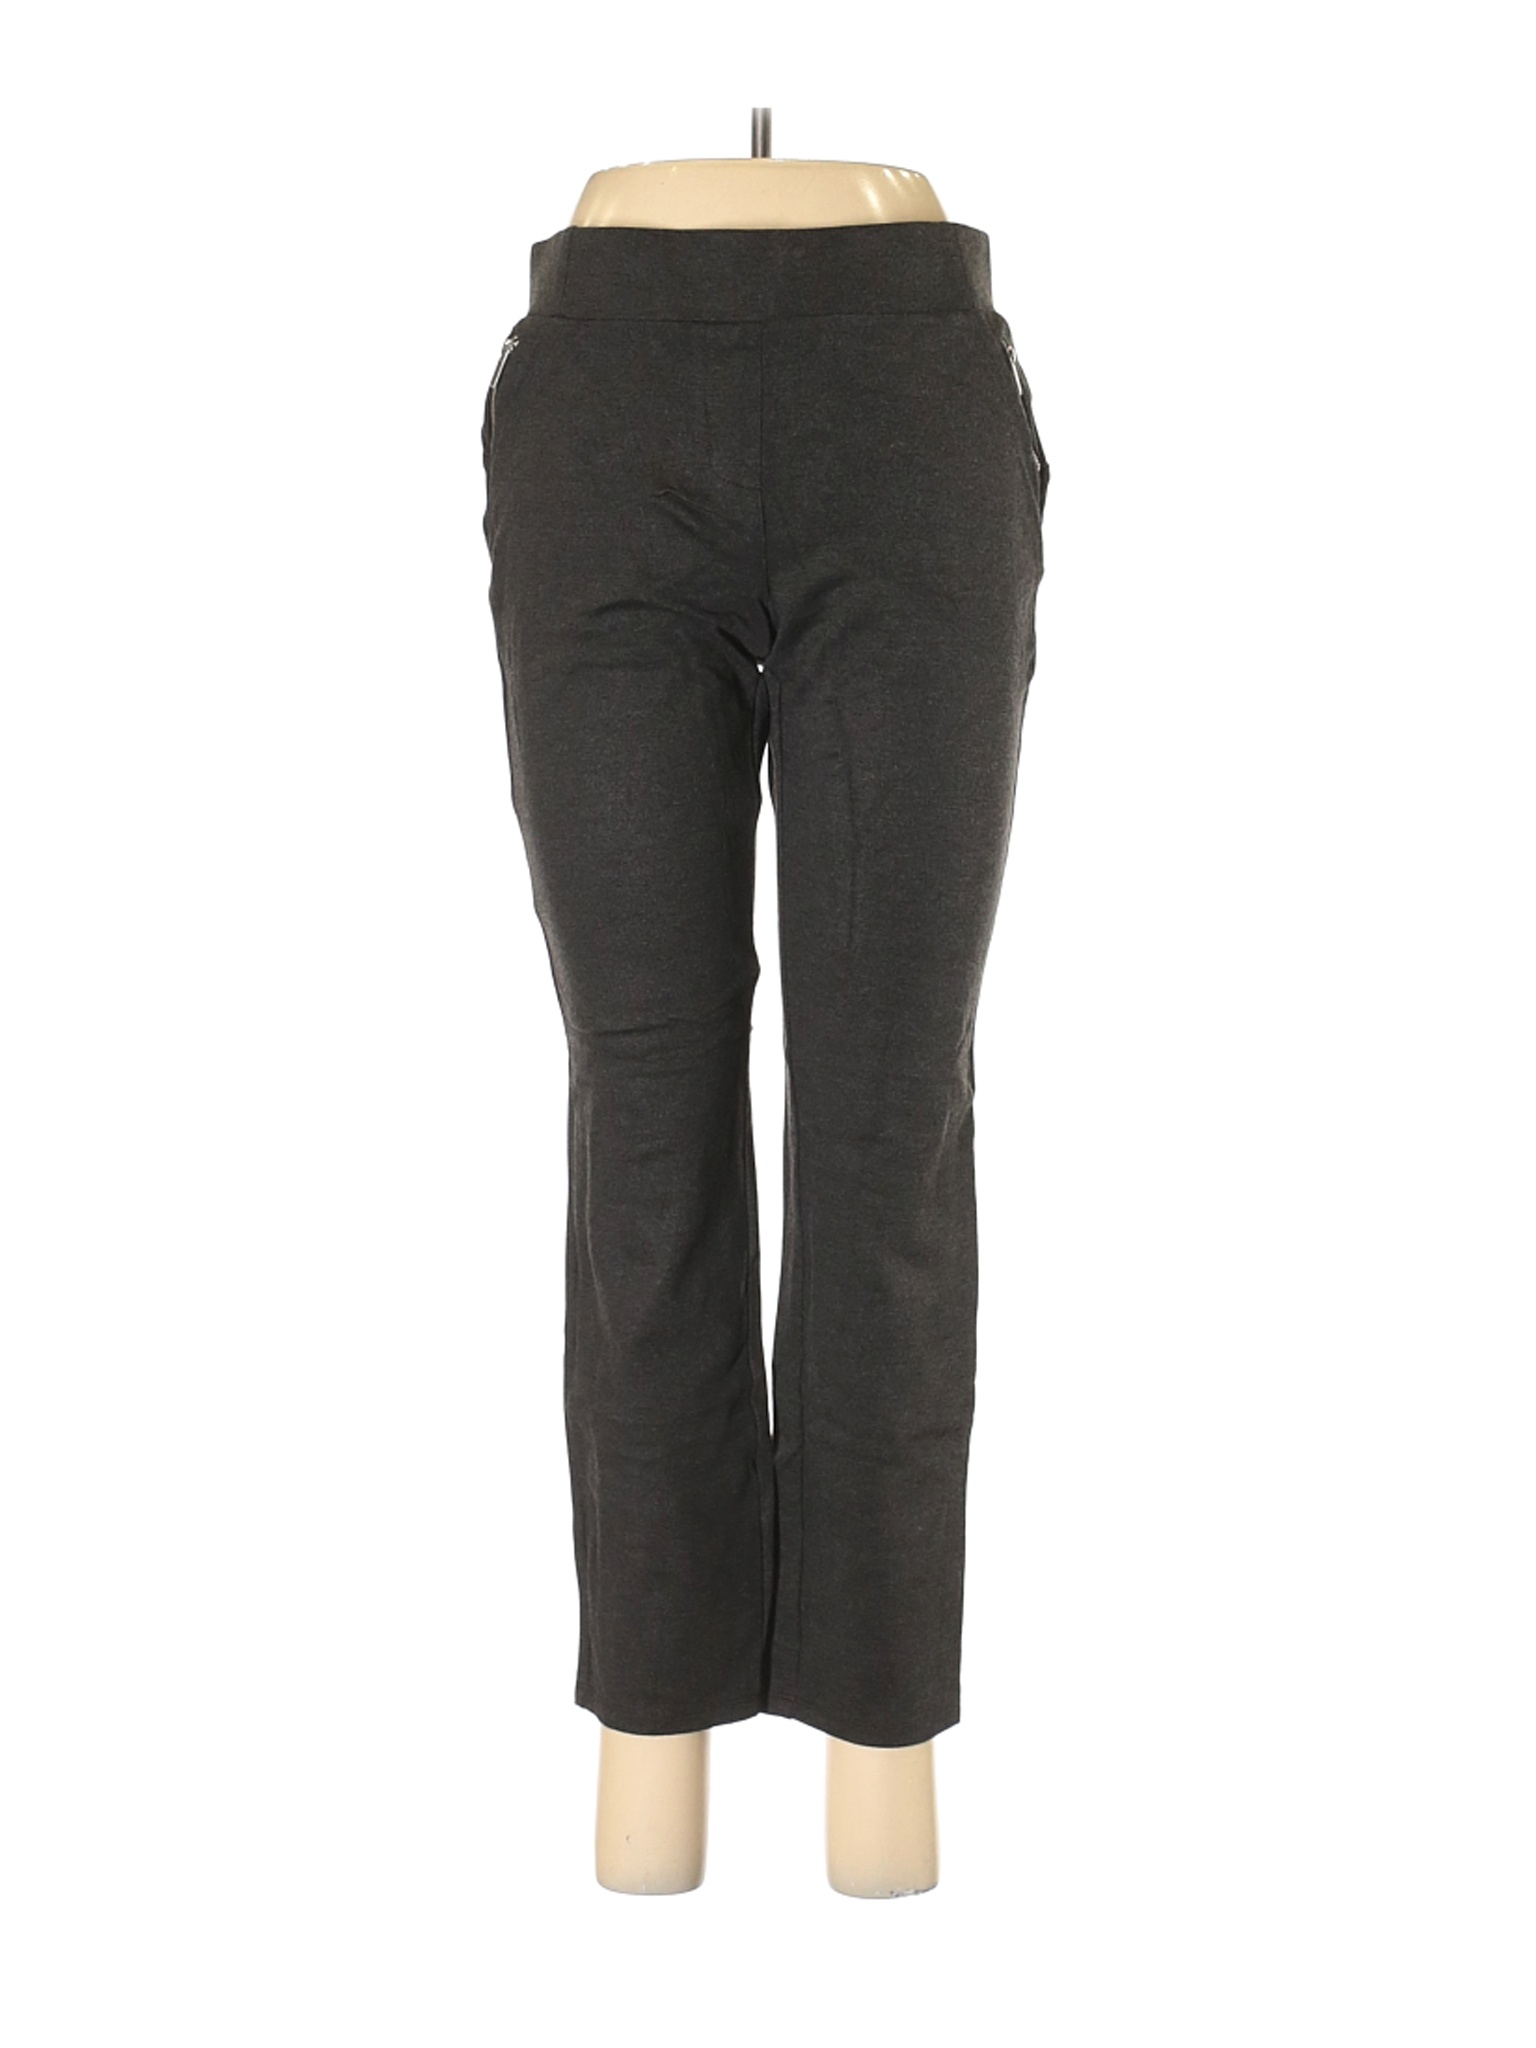 Jules & Leopold Women Black Casual Pants M | eBay